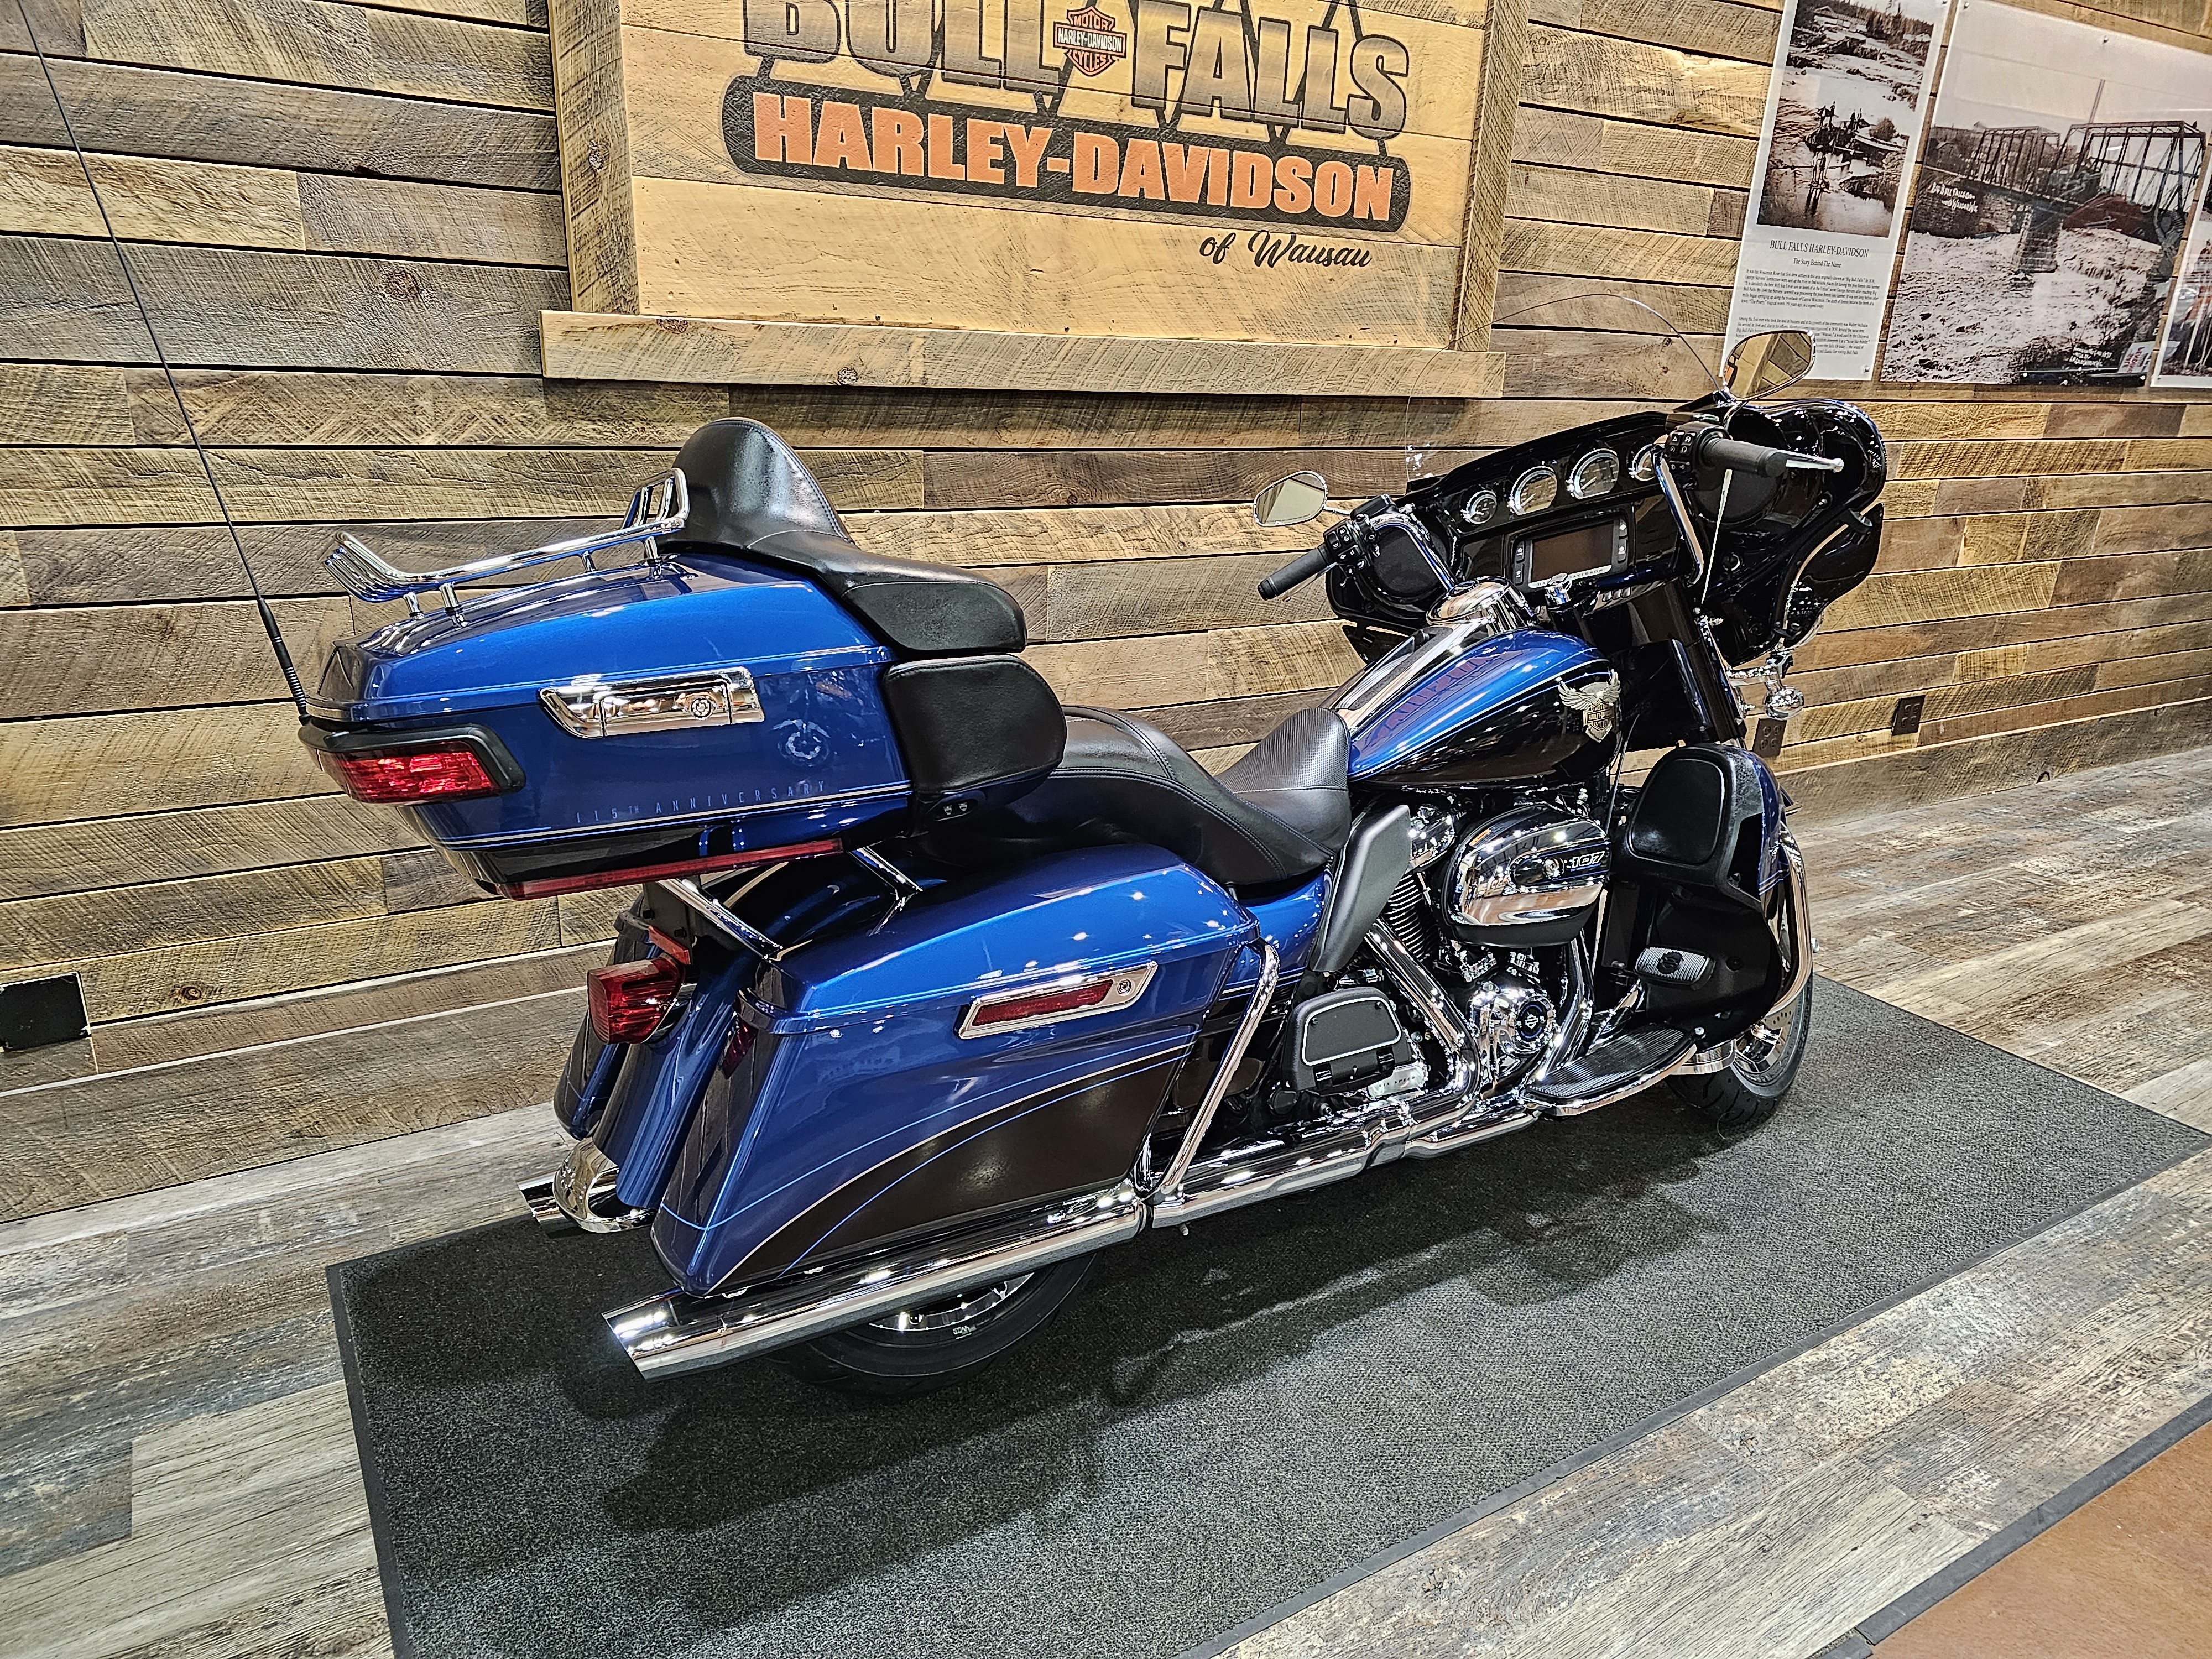 2018 Harley-Davidson Electra Glide Ultra Limited at Bull Falls Harley-Davidson